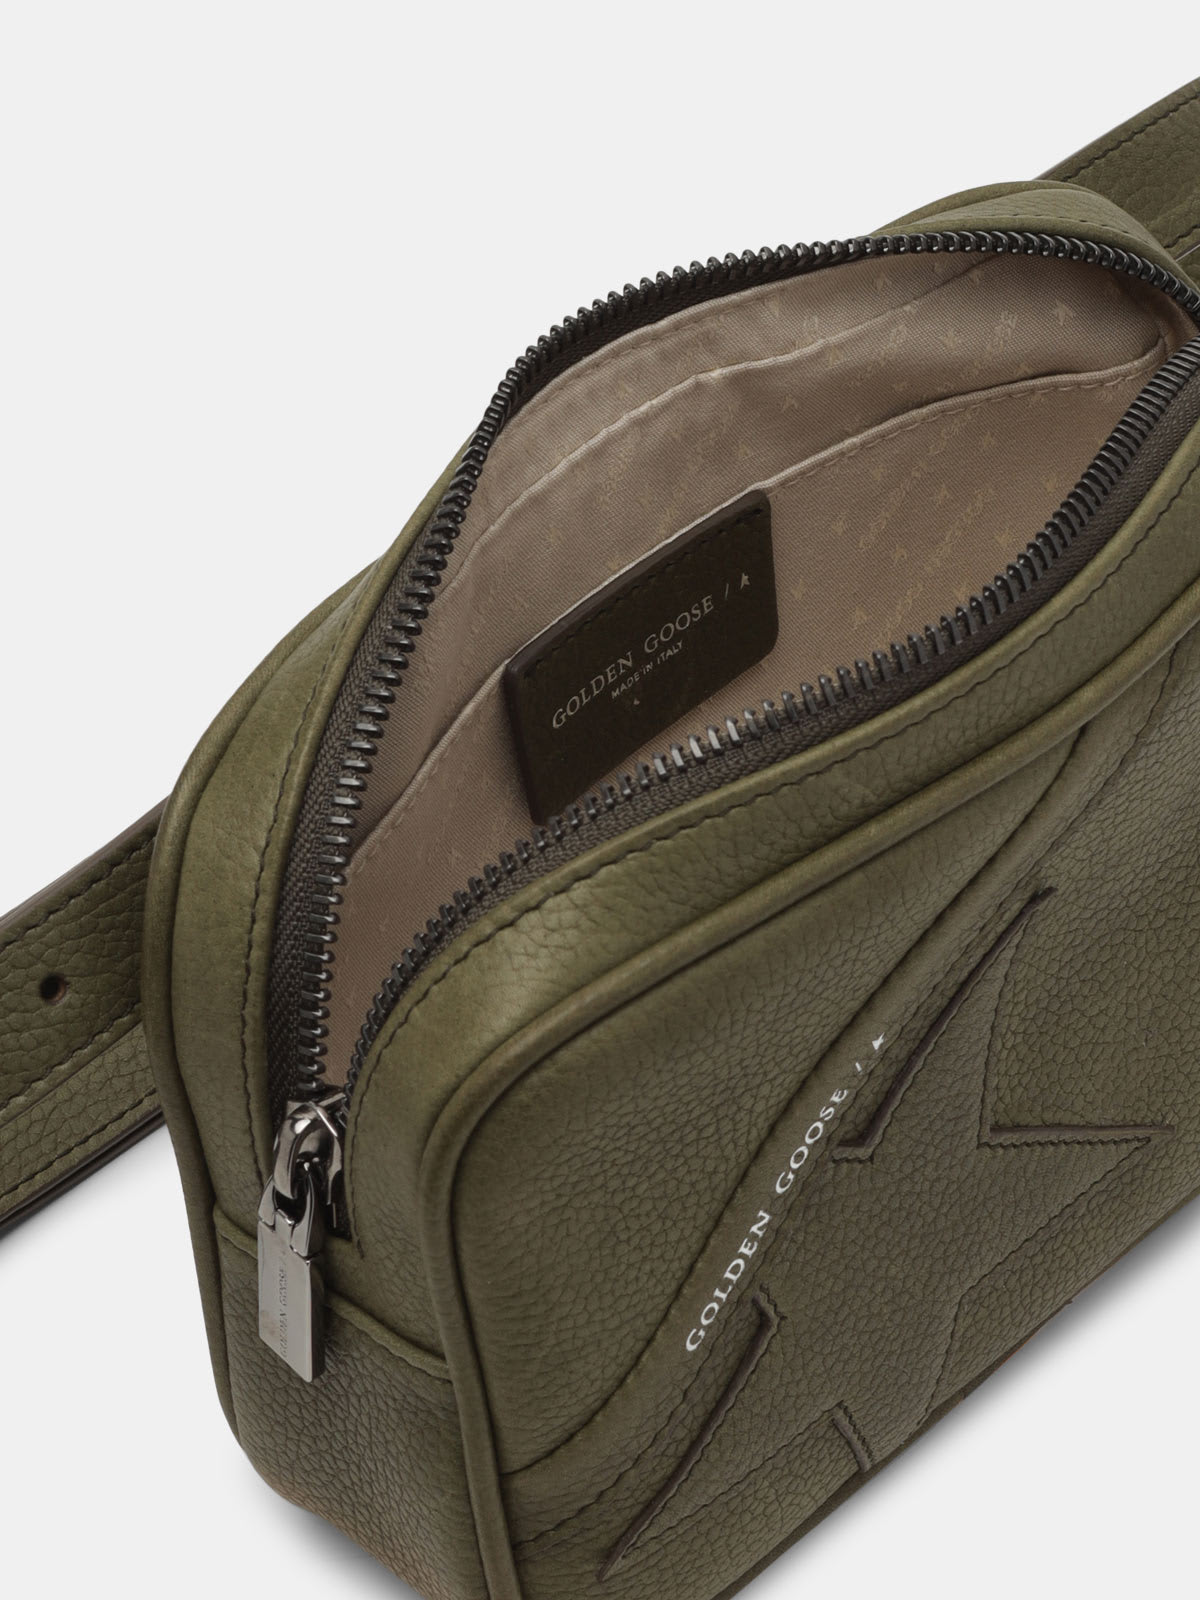 Golden Goose - Bolso Star Belt Bag verde militar de piel martillada in 